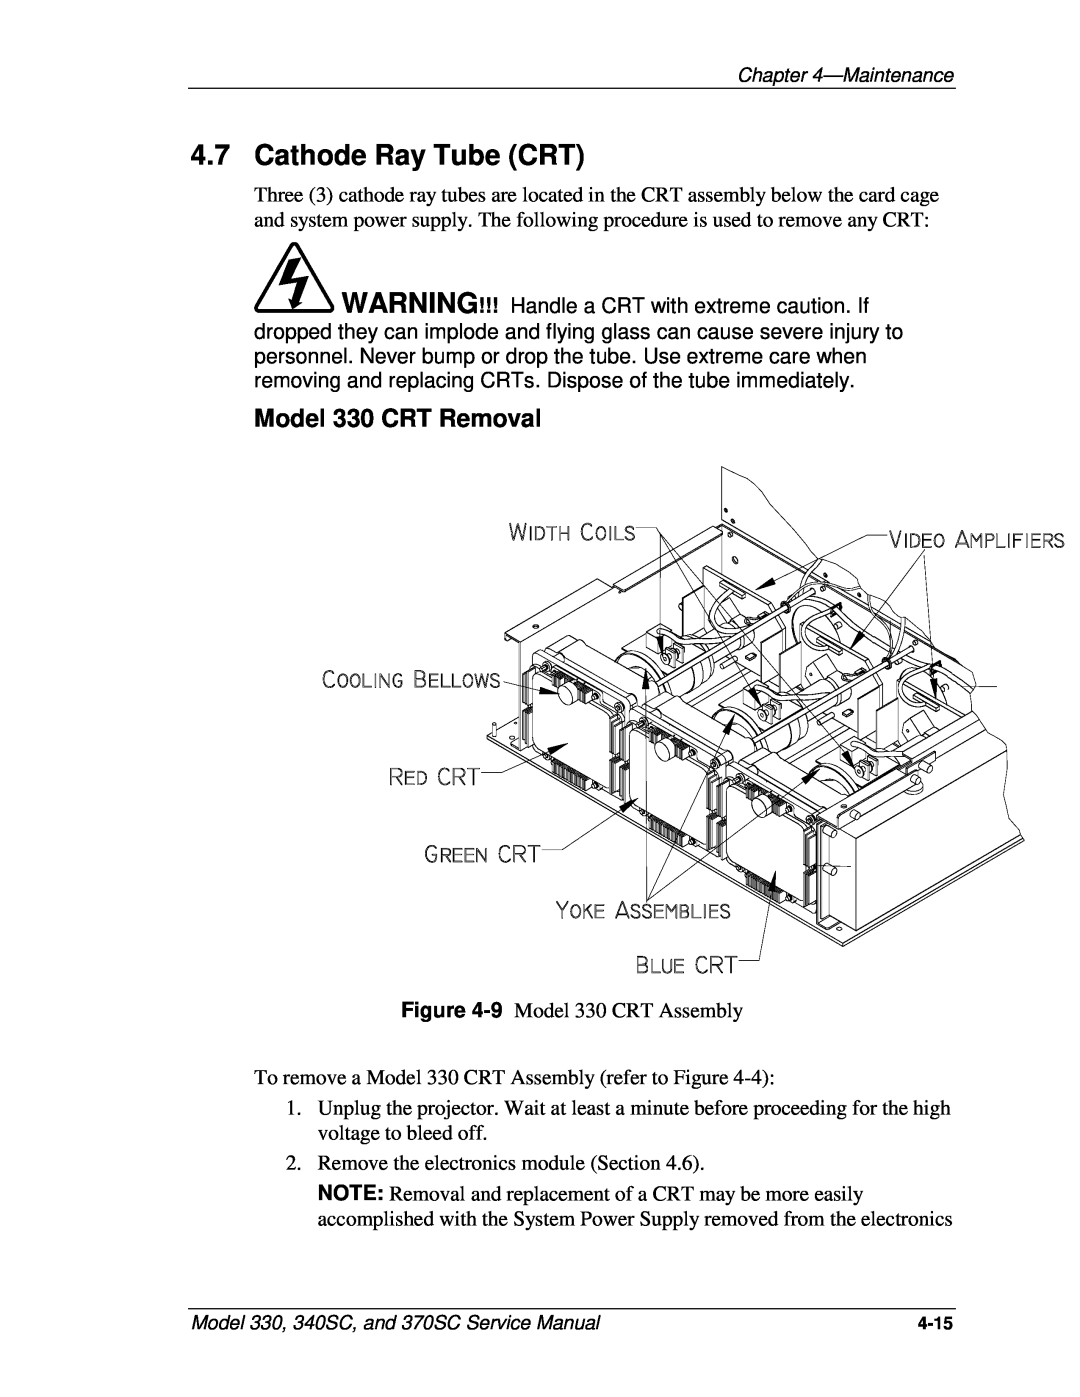 JVC 340 SC, 370 SC service manual Cathode Ray Tube CRT, Model 330 CRT Removal 